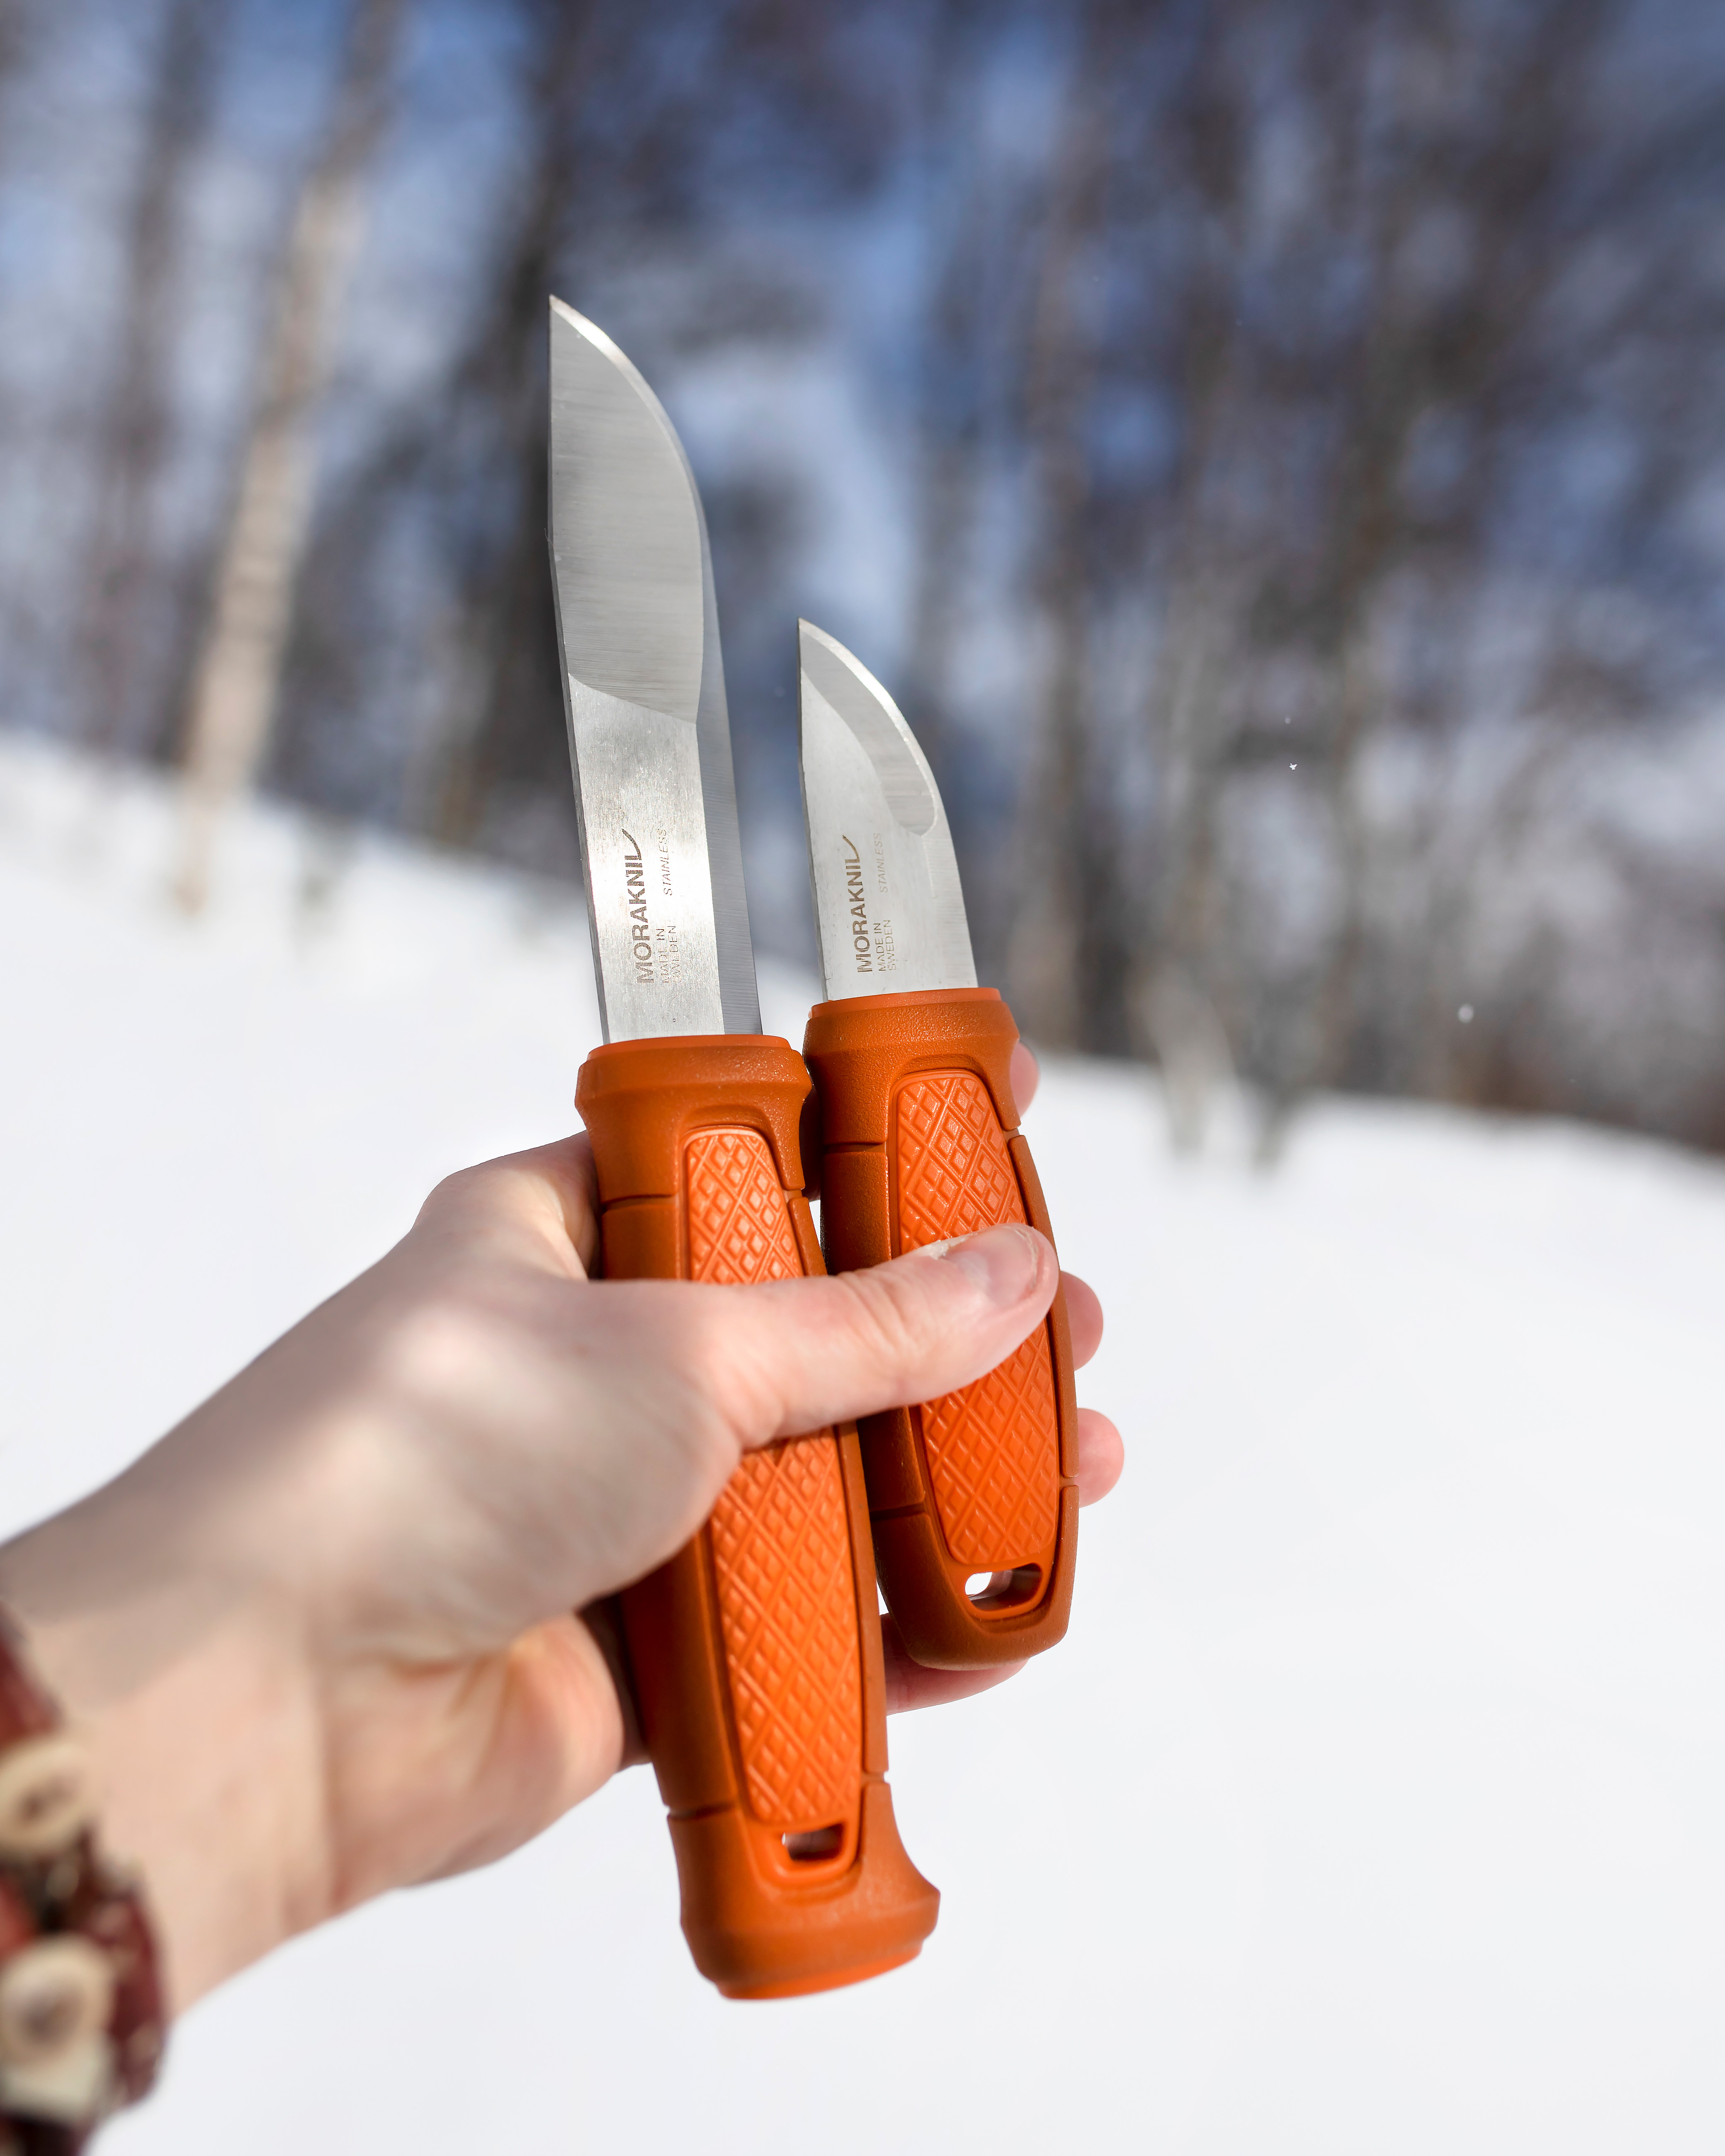 MORAKNIV Kansbol Burnt Orange Knife and Sheath ▷ General Purpose Knives ▷  Hand Tools ▷ TOOLS ▷ Products ▷ Kammarton Bulgaria - Industrial Equipment